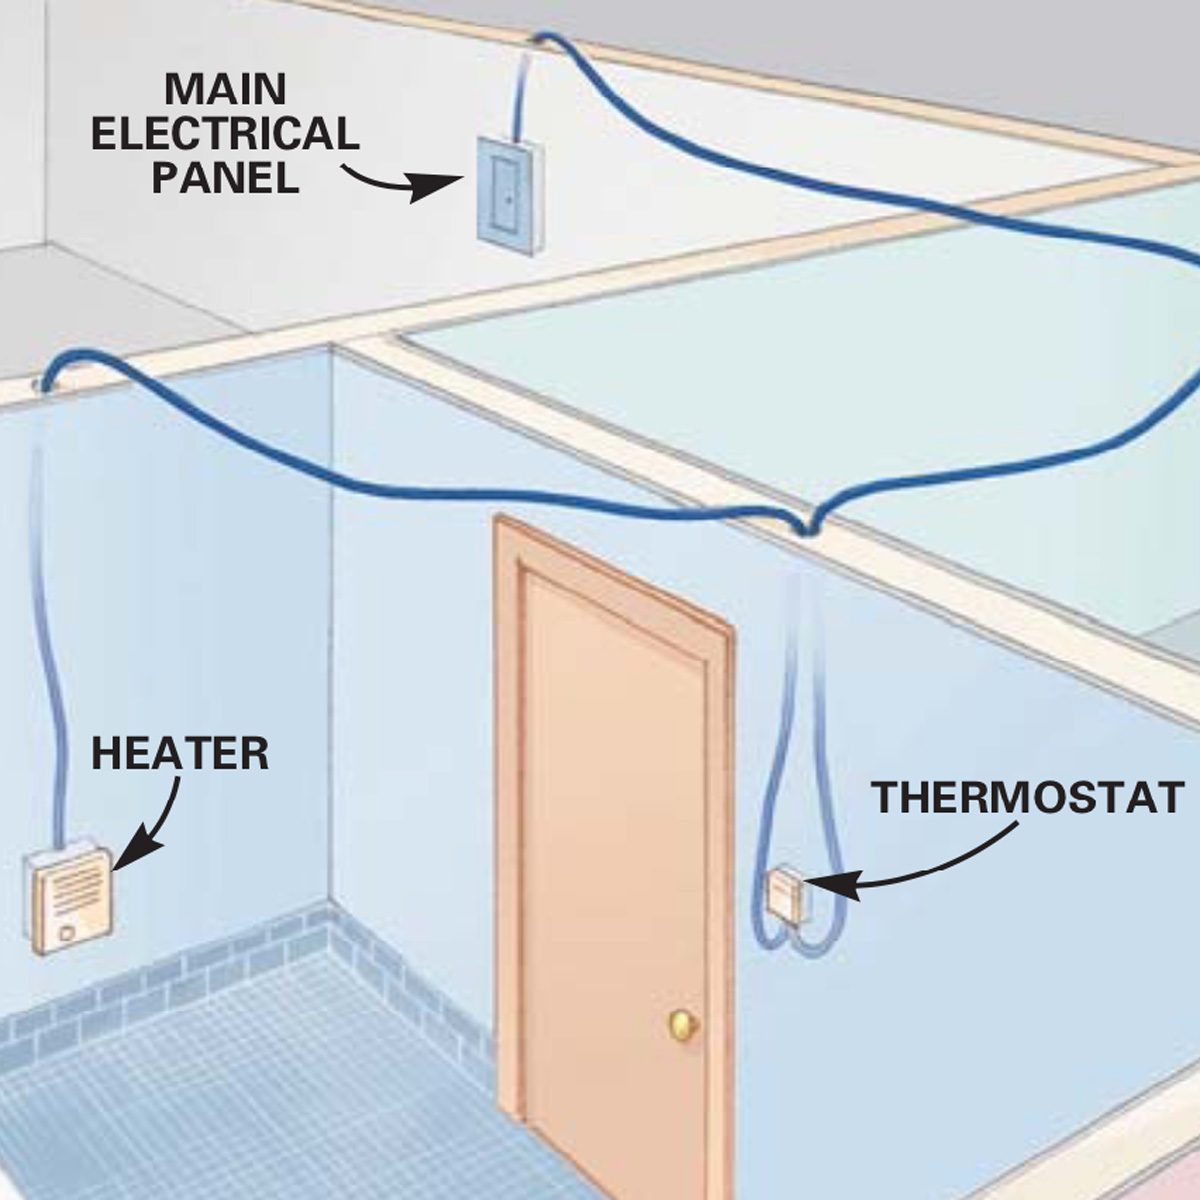 240V Electric Heater Wiring Diagram from www.familyhandyman.com